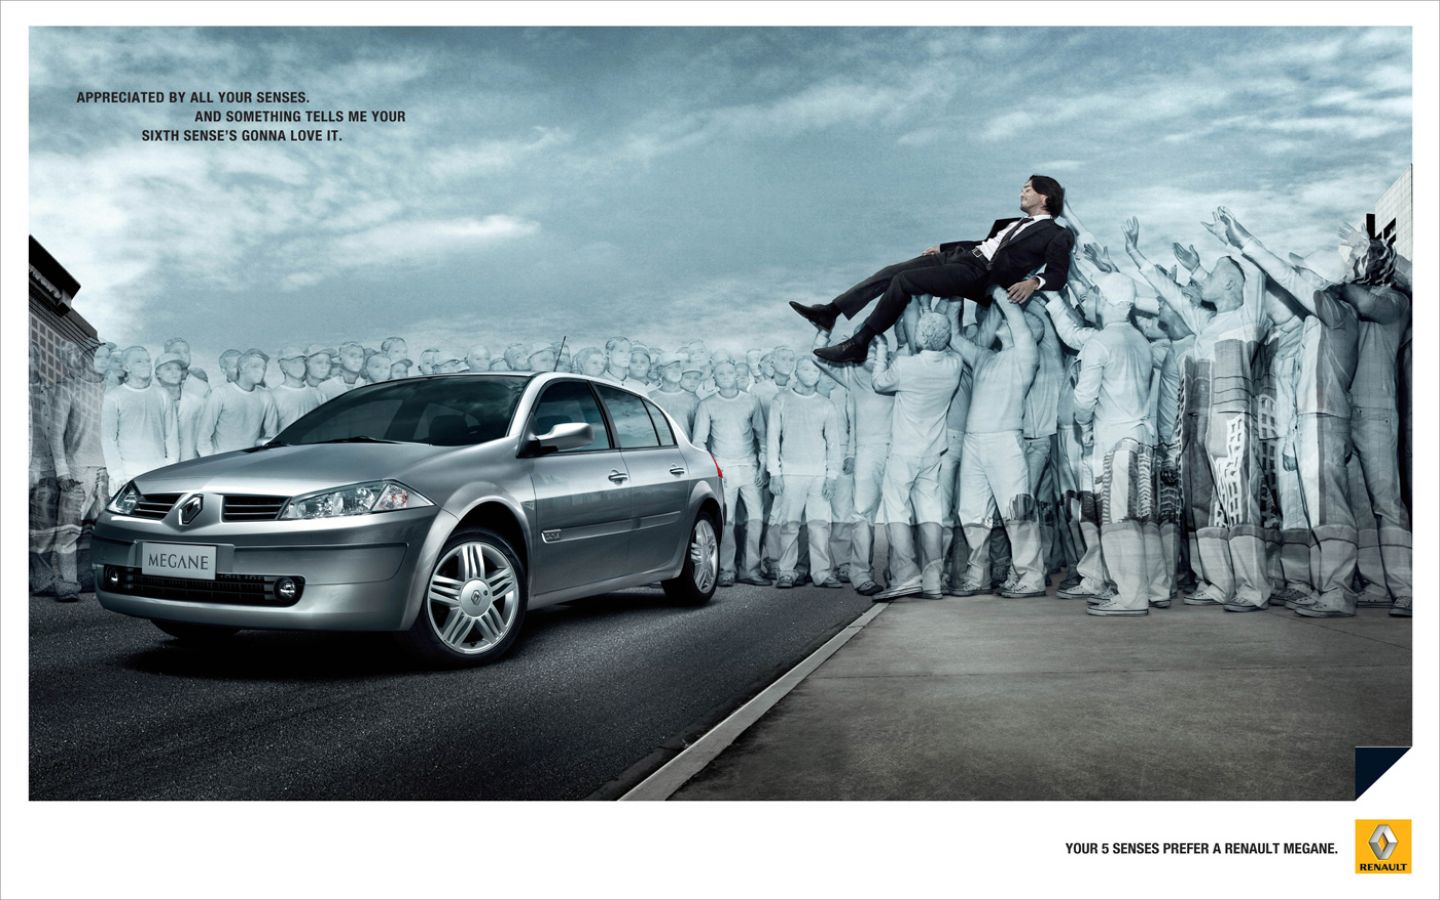 Бутусов рекламирует автомобиль. Реклама автомобиля. Необычная реклама автомобилей. Реклама на машине. Креативная реклама автомобилей.